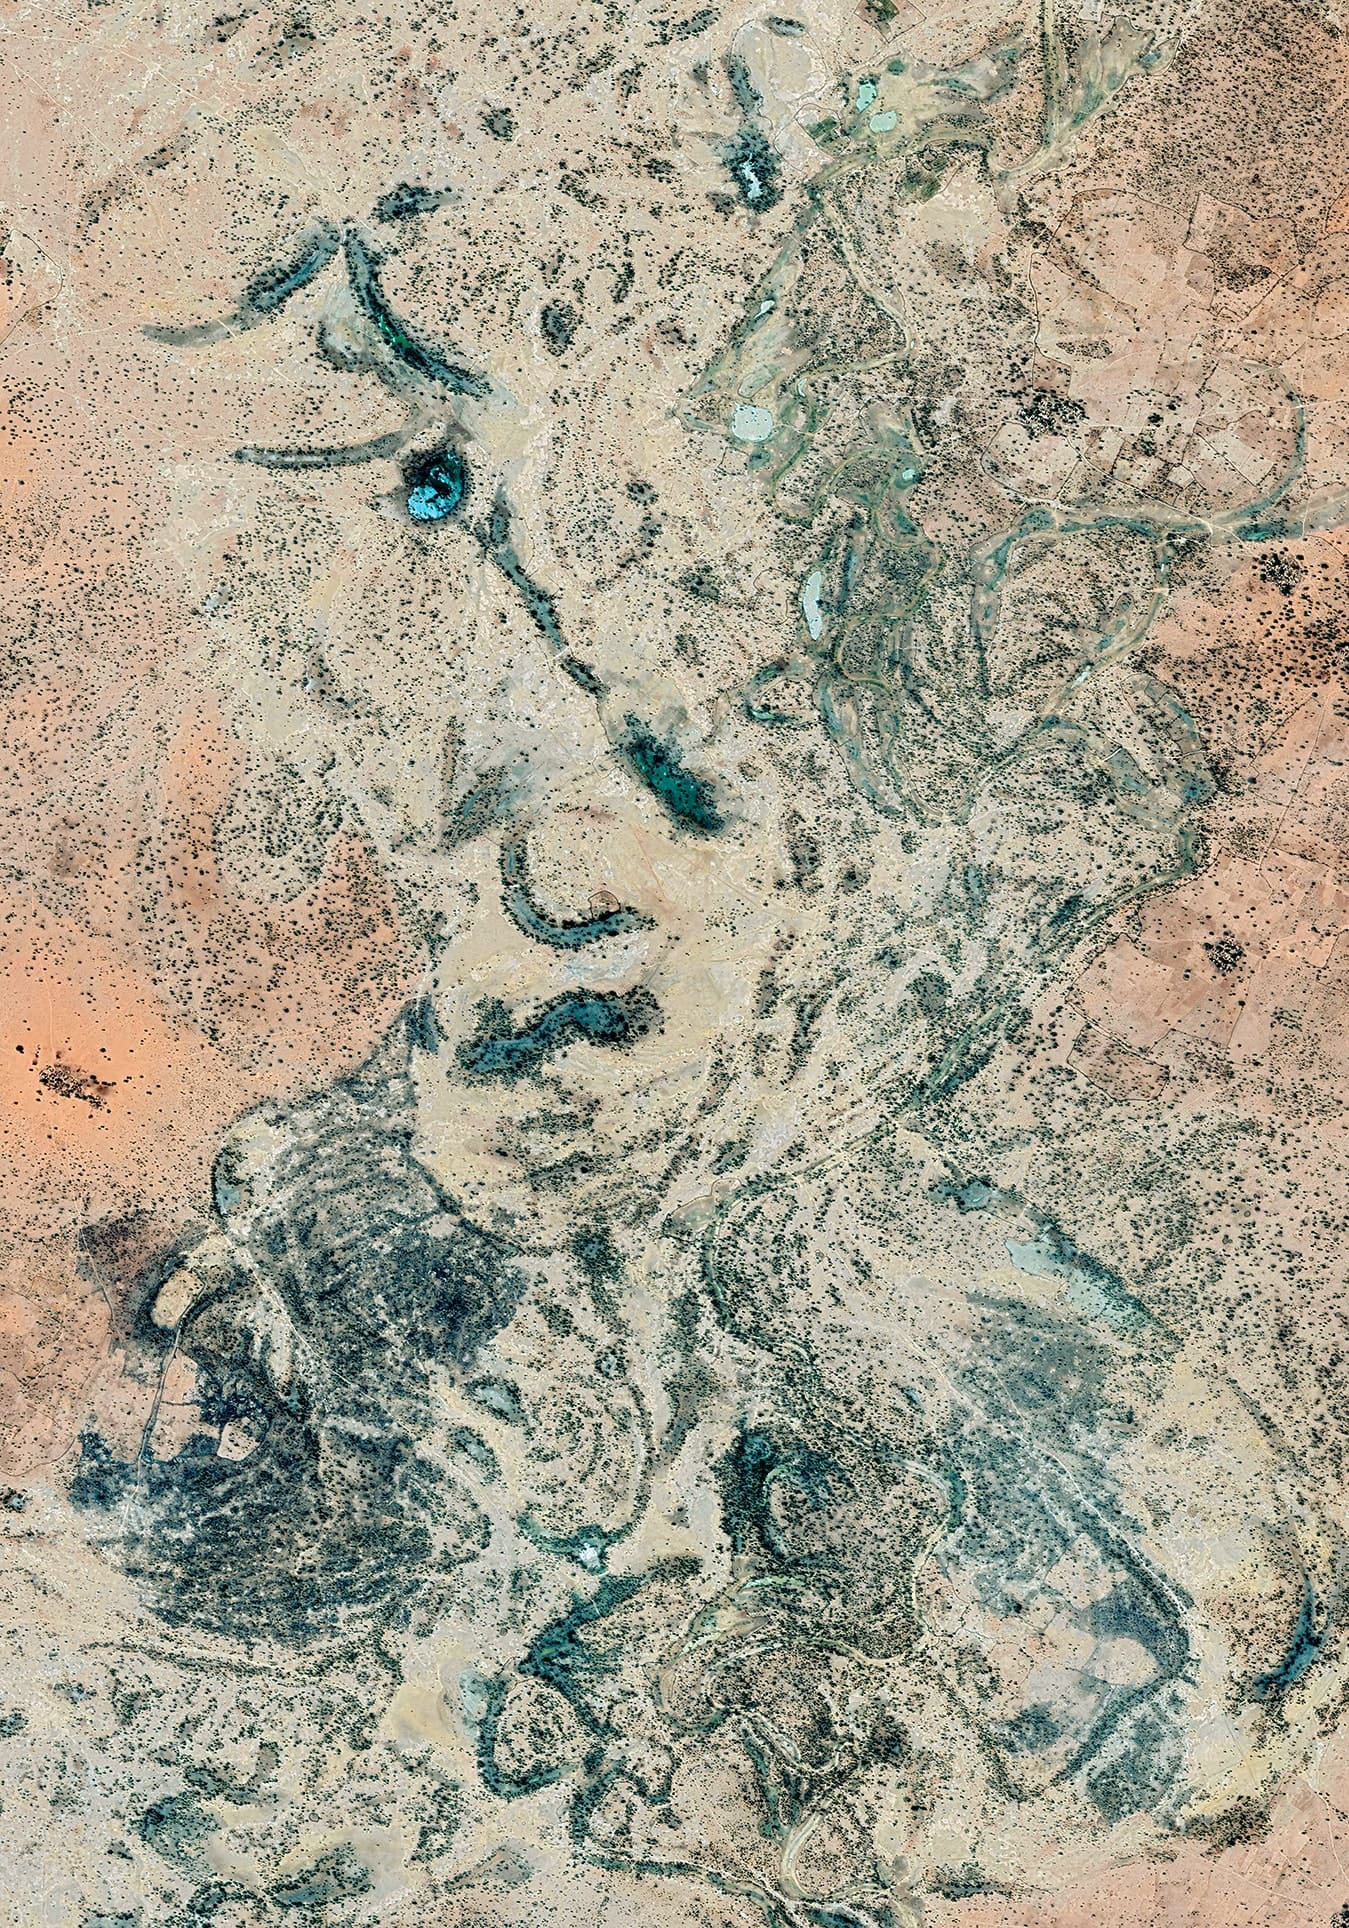 EARTH PORTRAIT 34 NIGERIA, 2018, CM 100×70, edition of 9